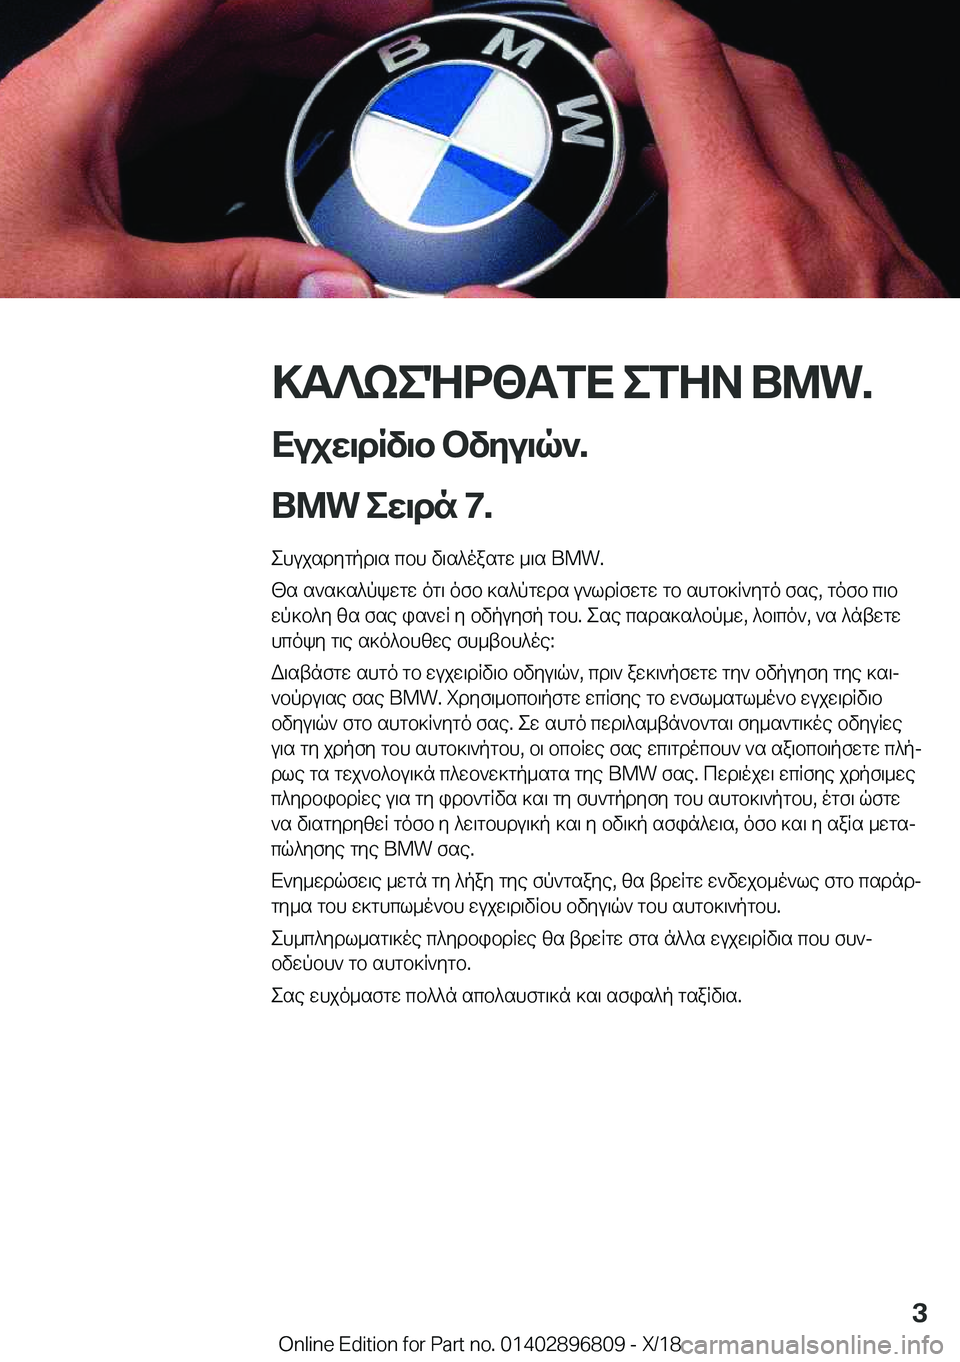 BMW 7 SERIES 2019  ΟΔΗΓΌΣ ΧΡΉΣΗΣ (in Greek) >T?keNd<TfX�efZA��B�M�W�.
Xujw\dRv\b�bvyu\q`�.
�B�M�W�ew\dn��7�. ehujsdygpd\s�cbh�v\s^oasgw�_\s��B�M�W�.
[s�s`s]s^pk